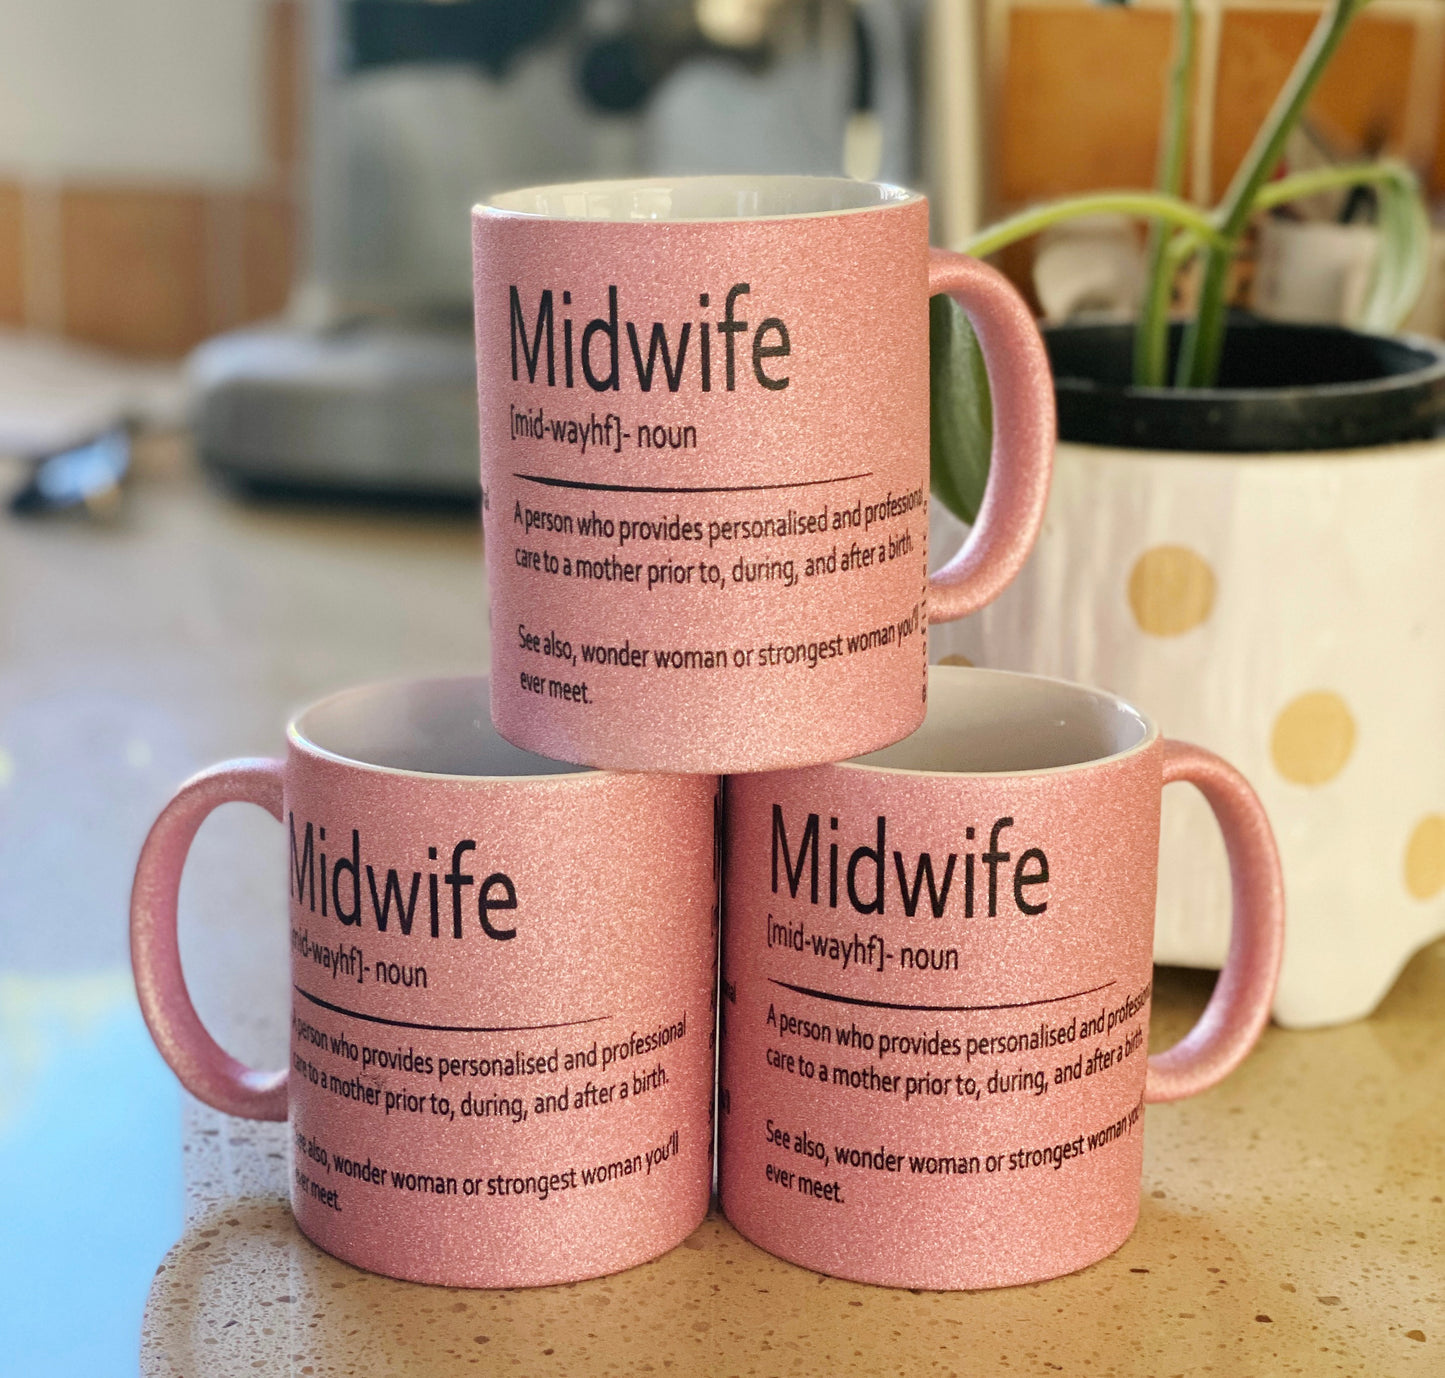 Midwife glitter mugs - limited supply